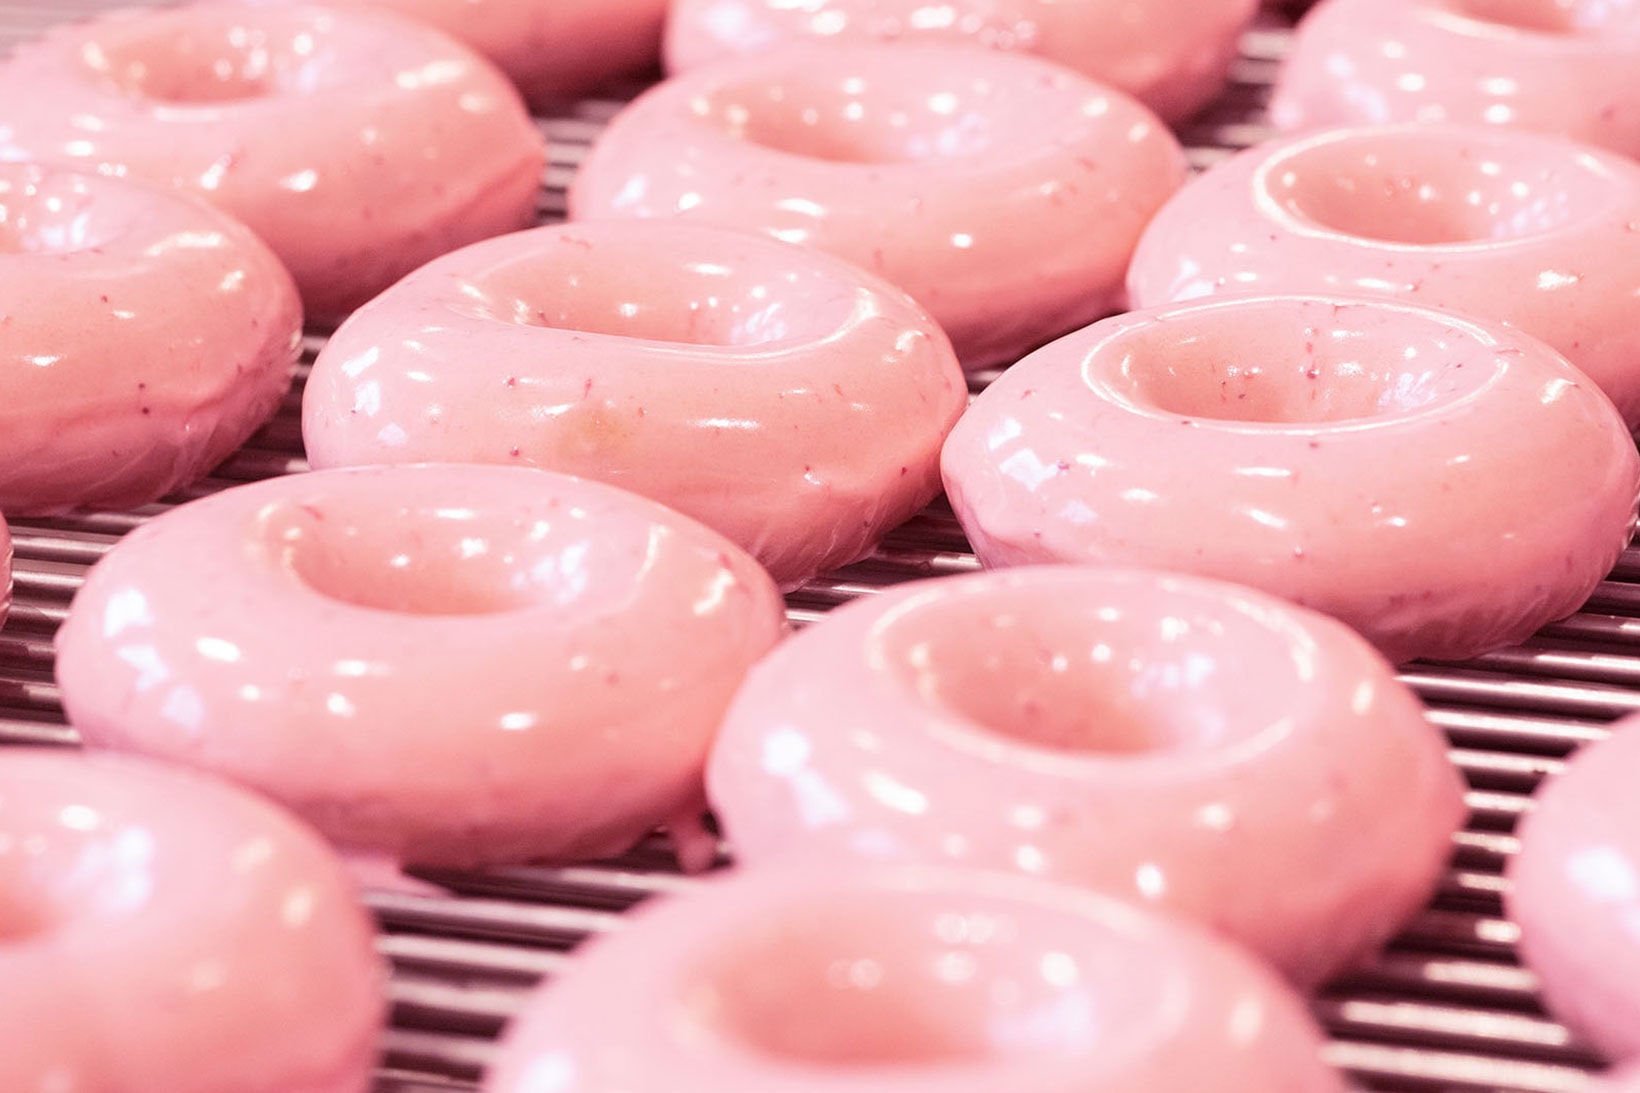 krispy kreme strawberry glazed donuts factory making